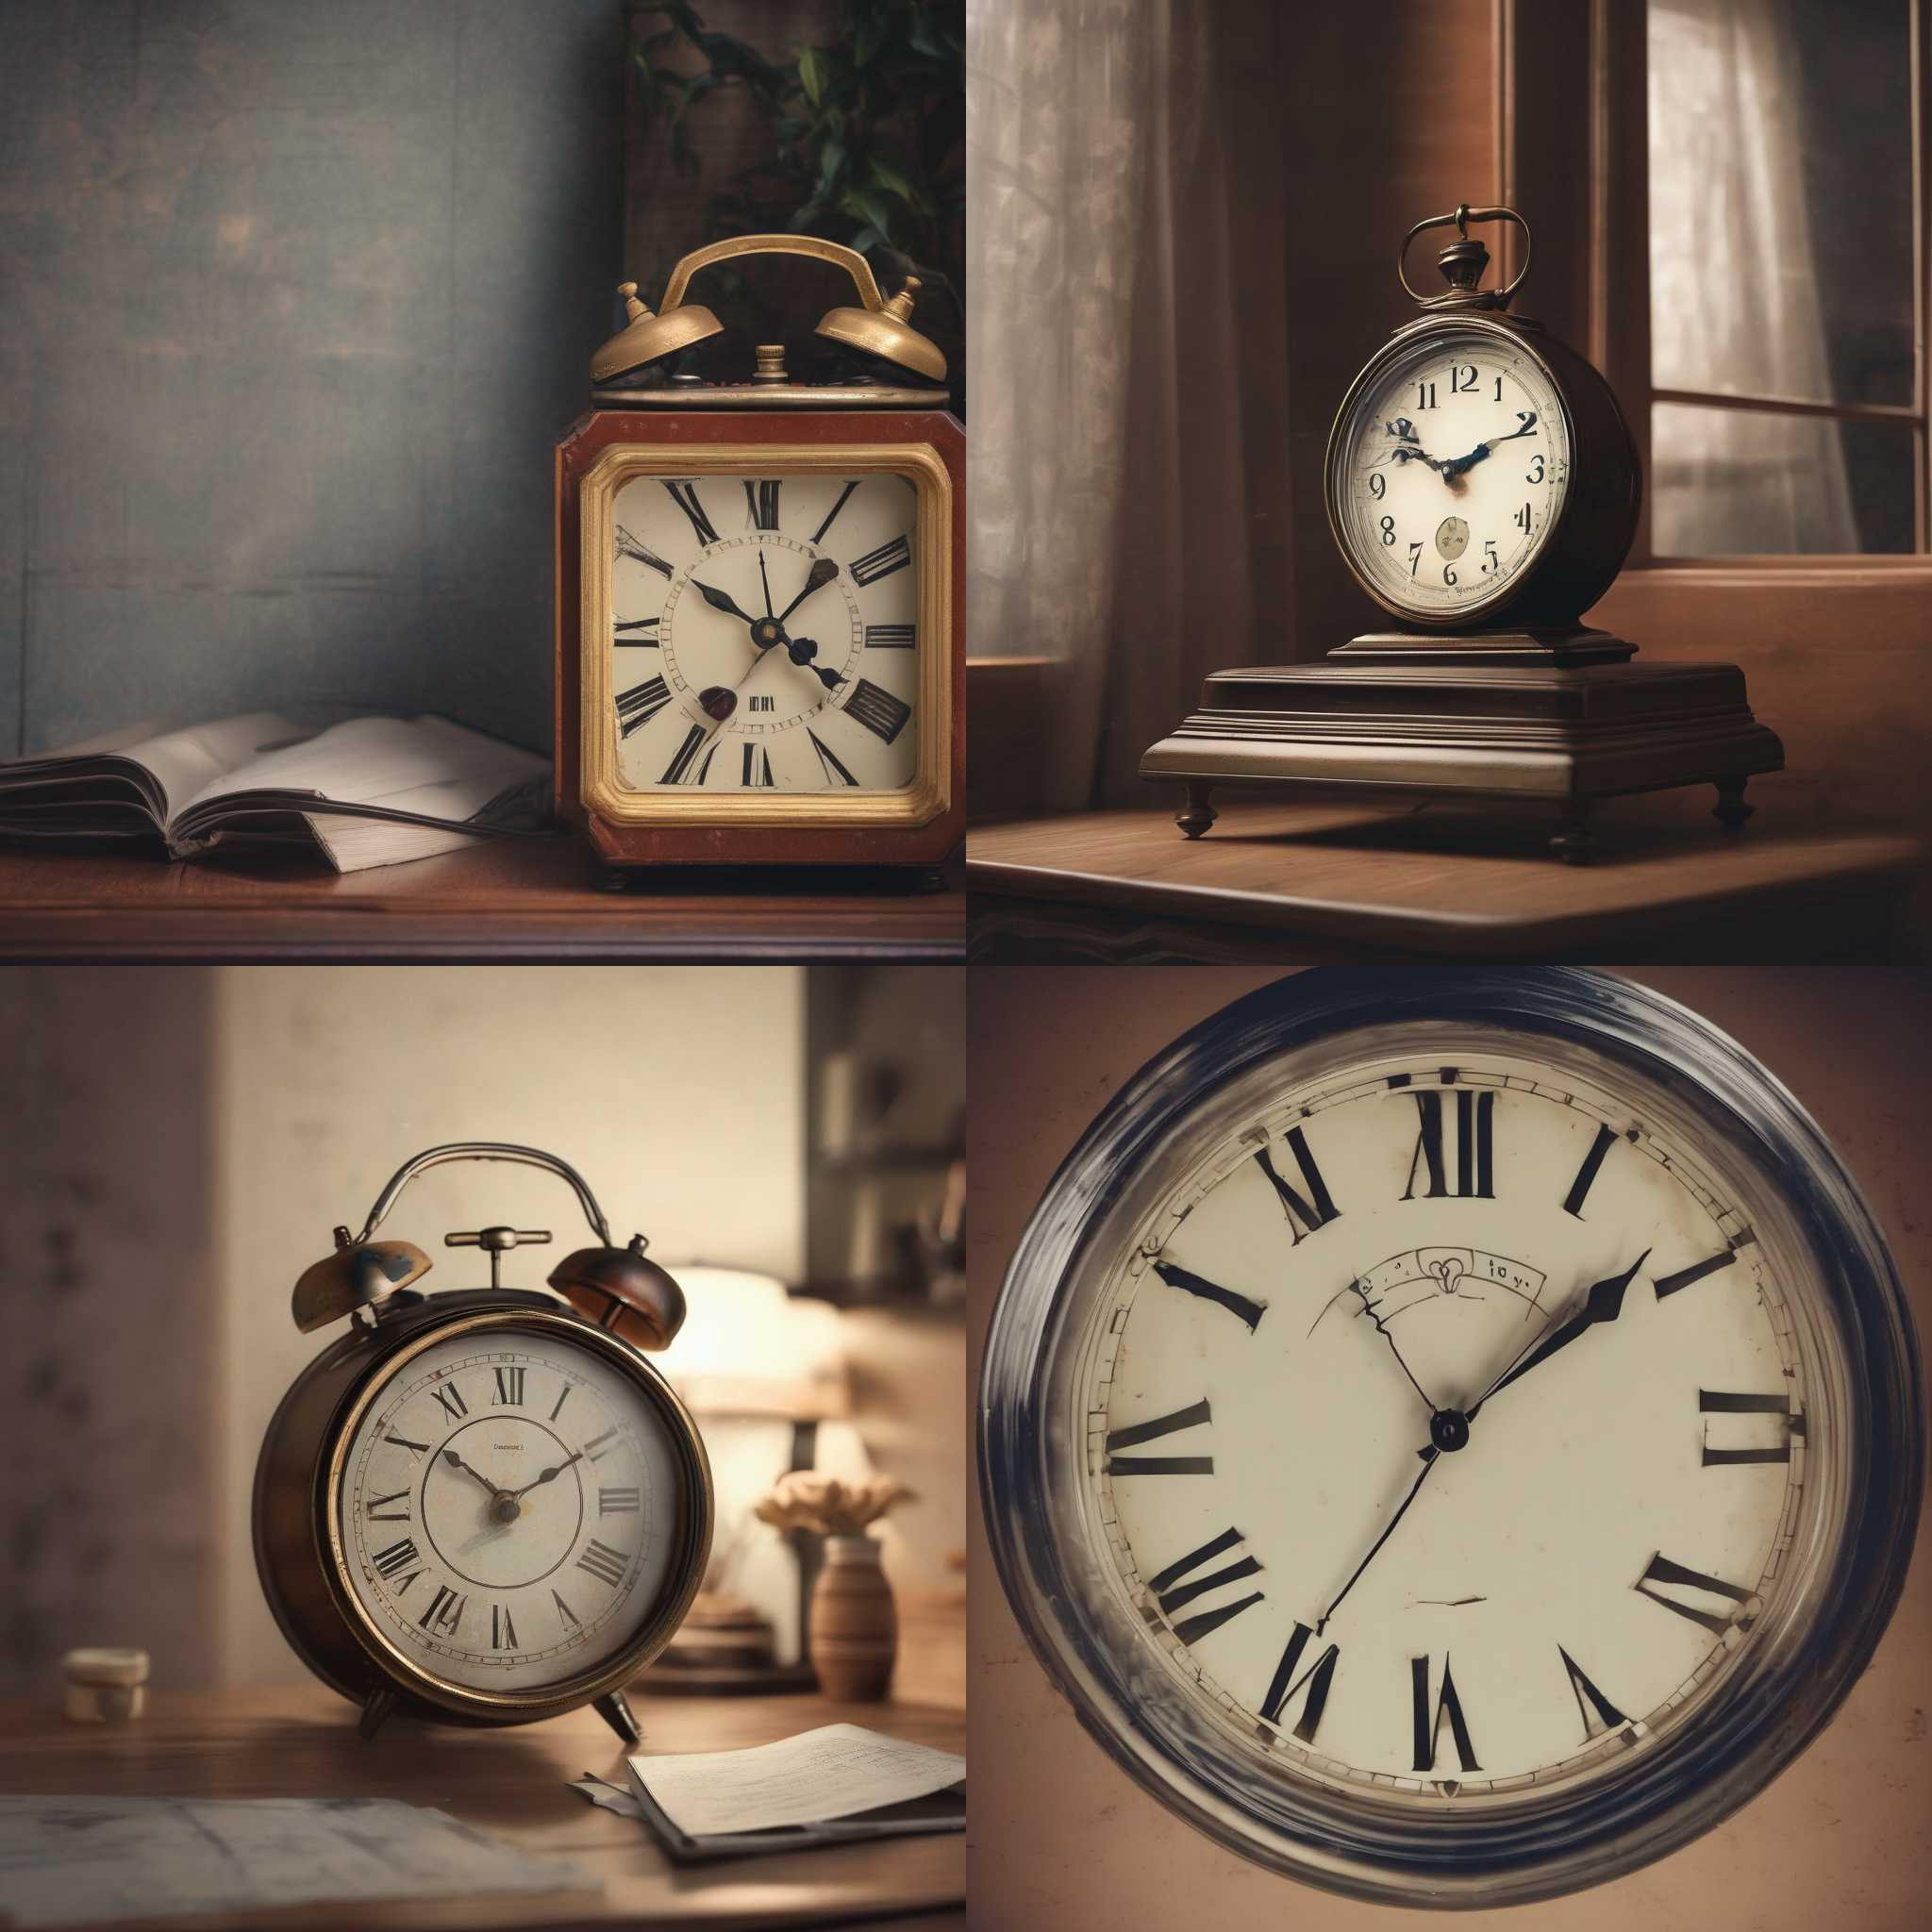 A vintage clock showing 3 AM